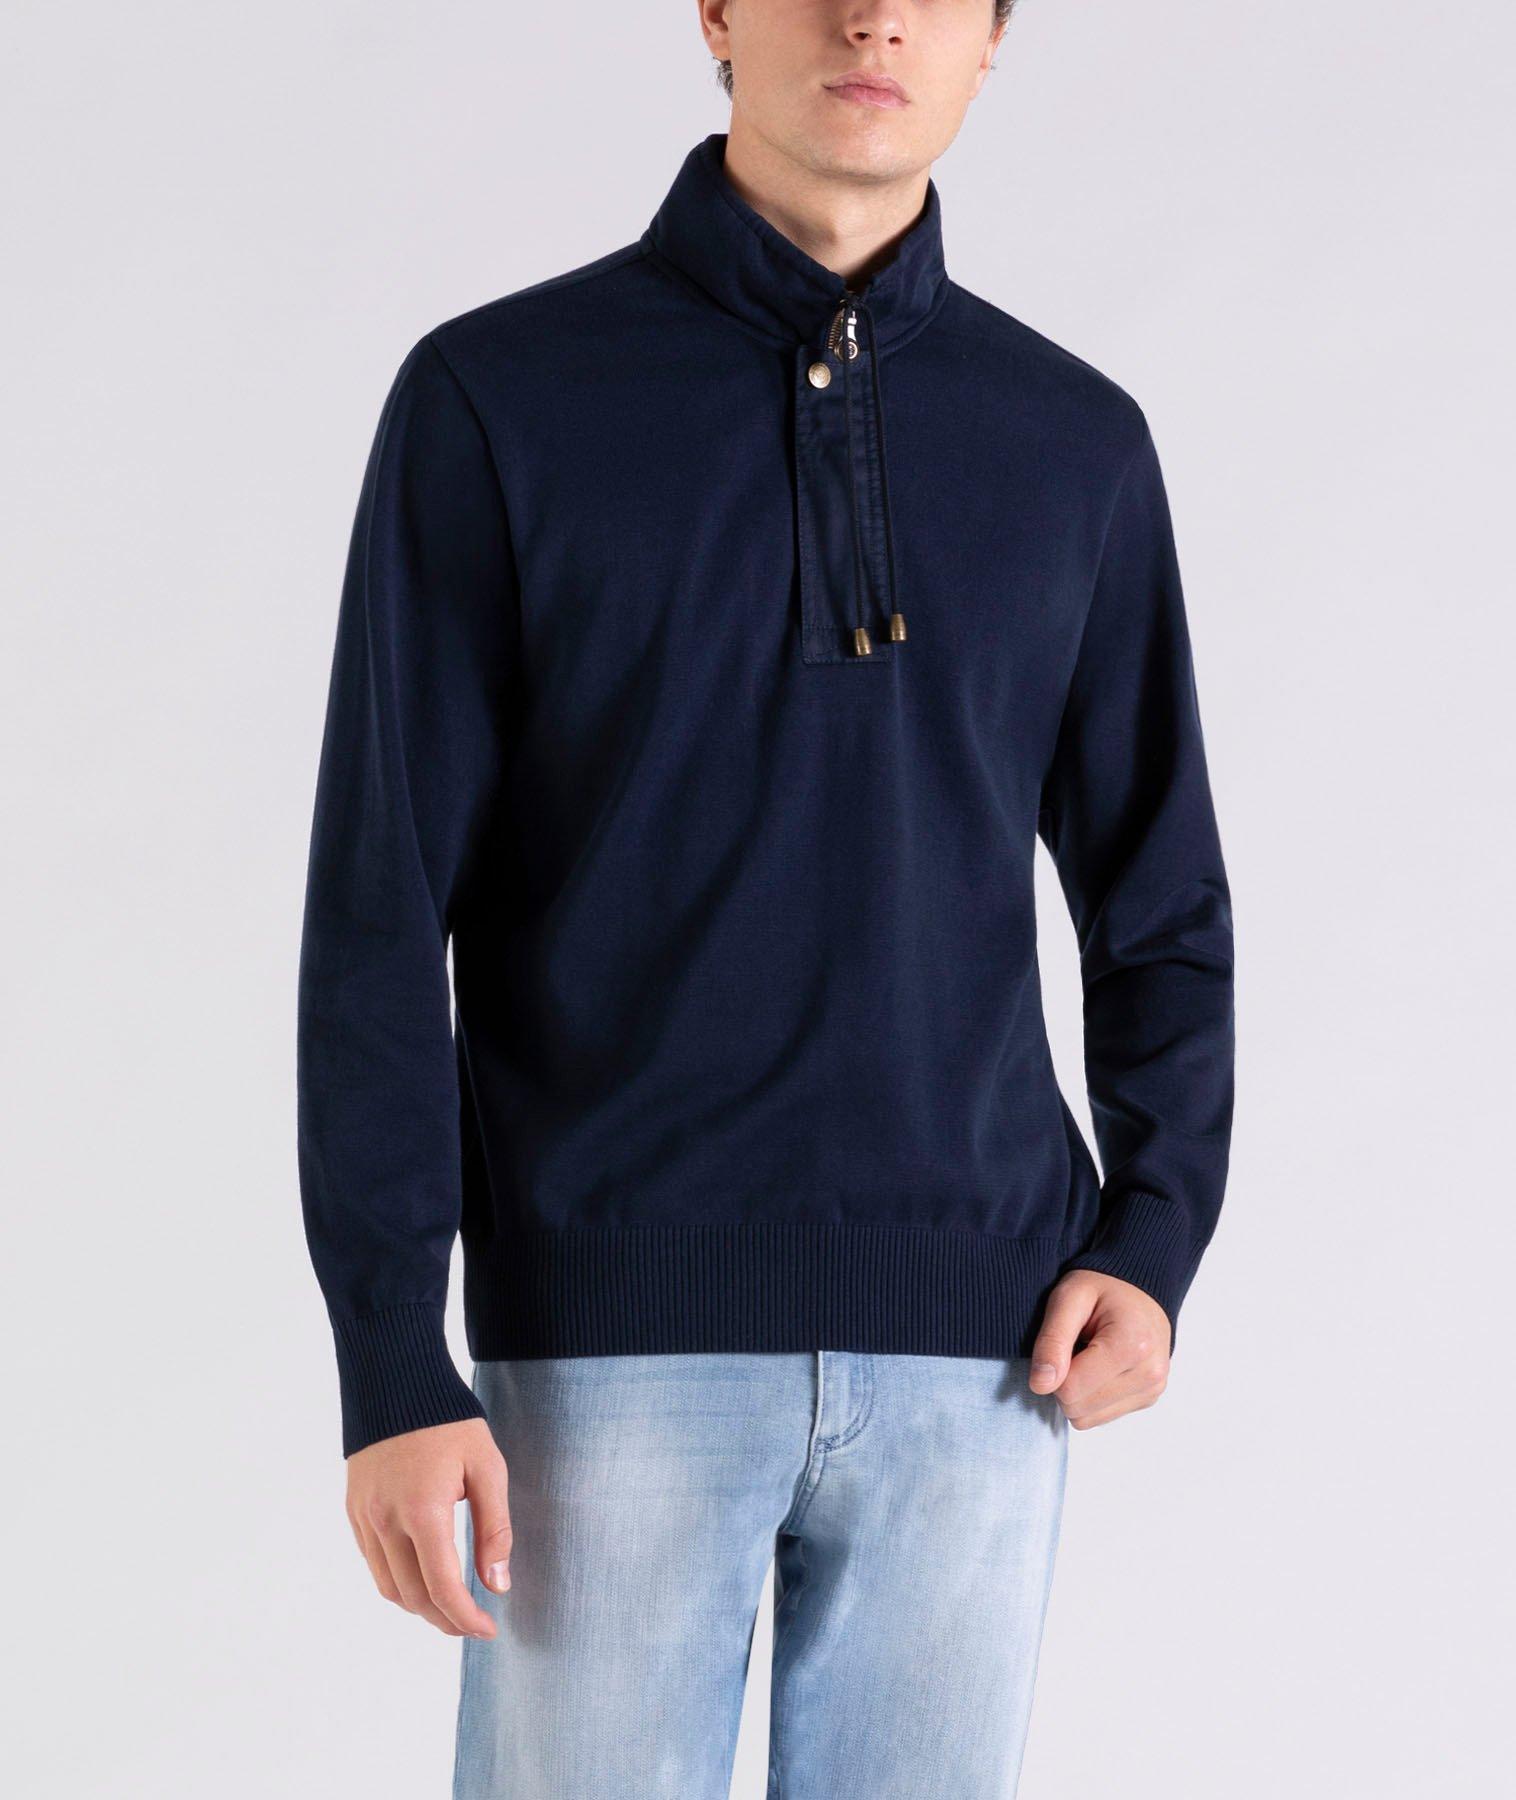 Half-Zip Cotton Sweater image 0